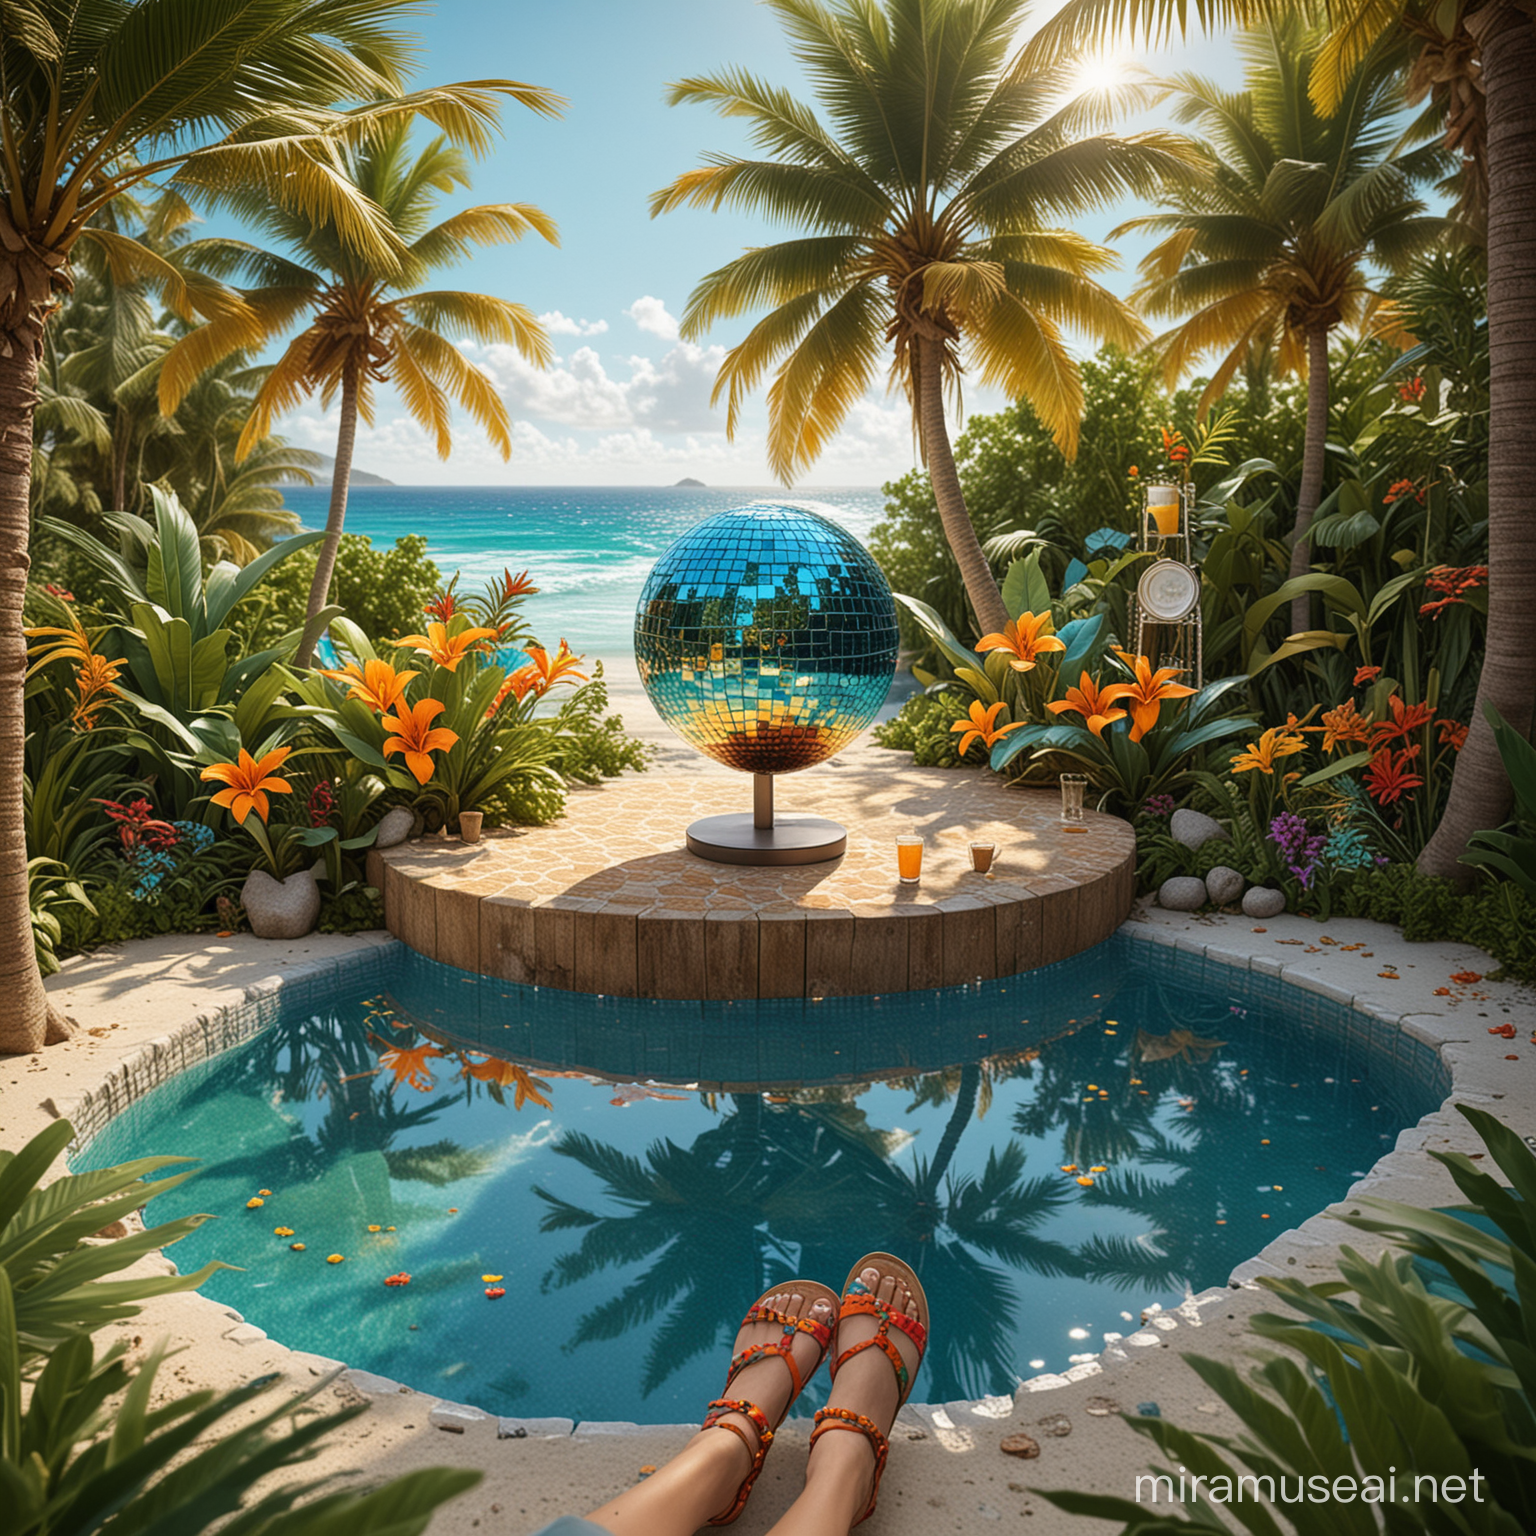 Miniature Tropical Island Scene with Vibrant Disco Ball